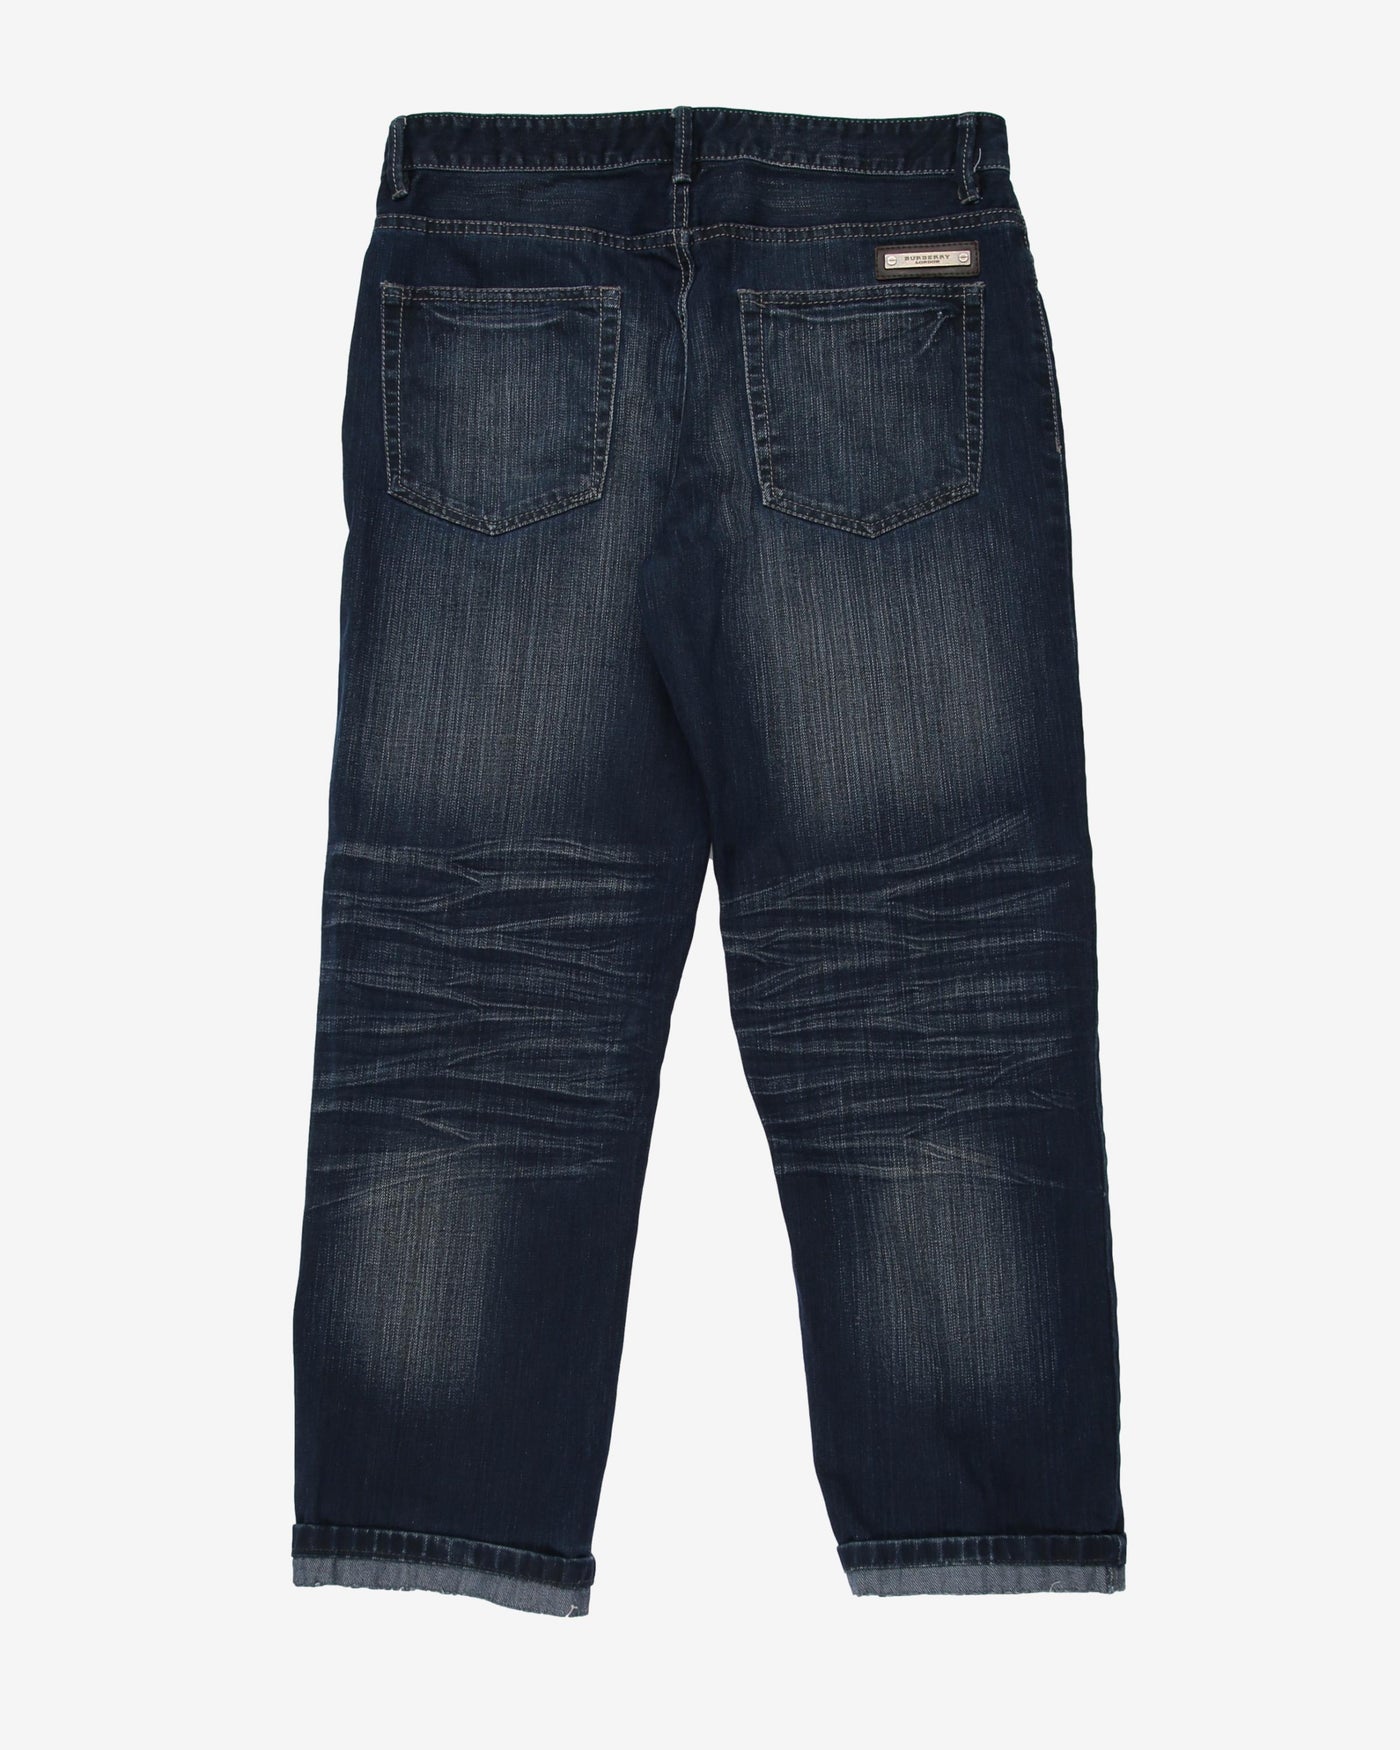 burberry dark indigo straight leg jeans - w34l27